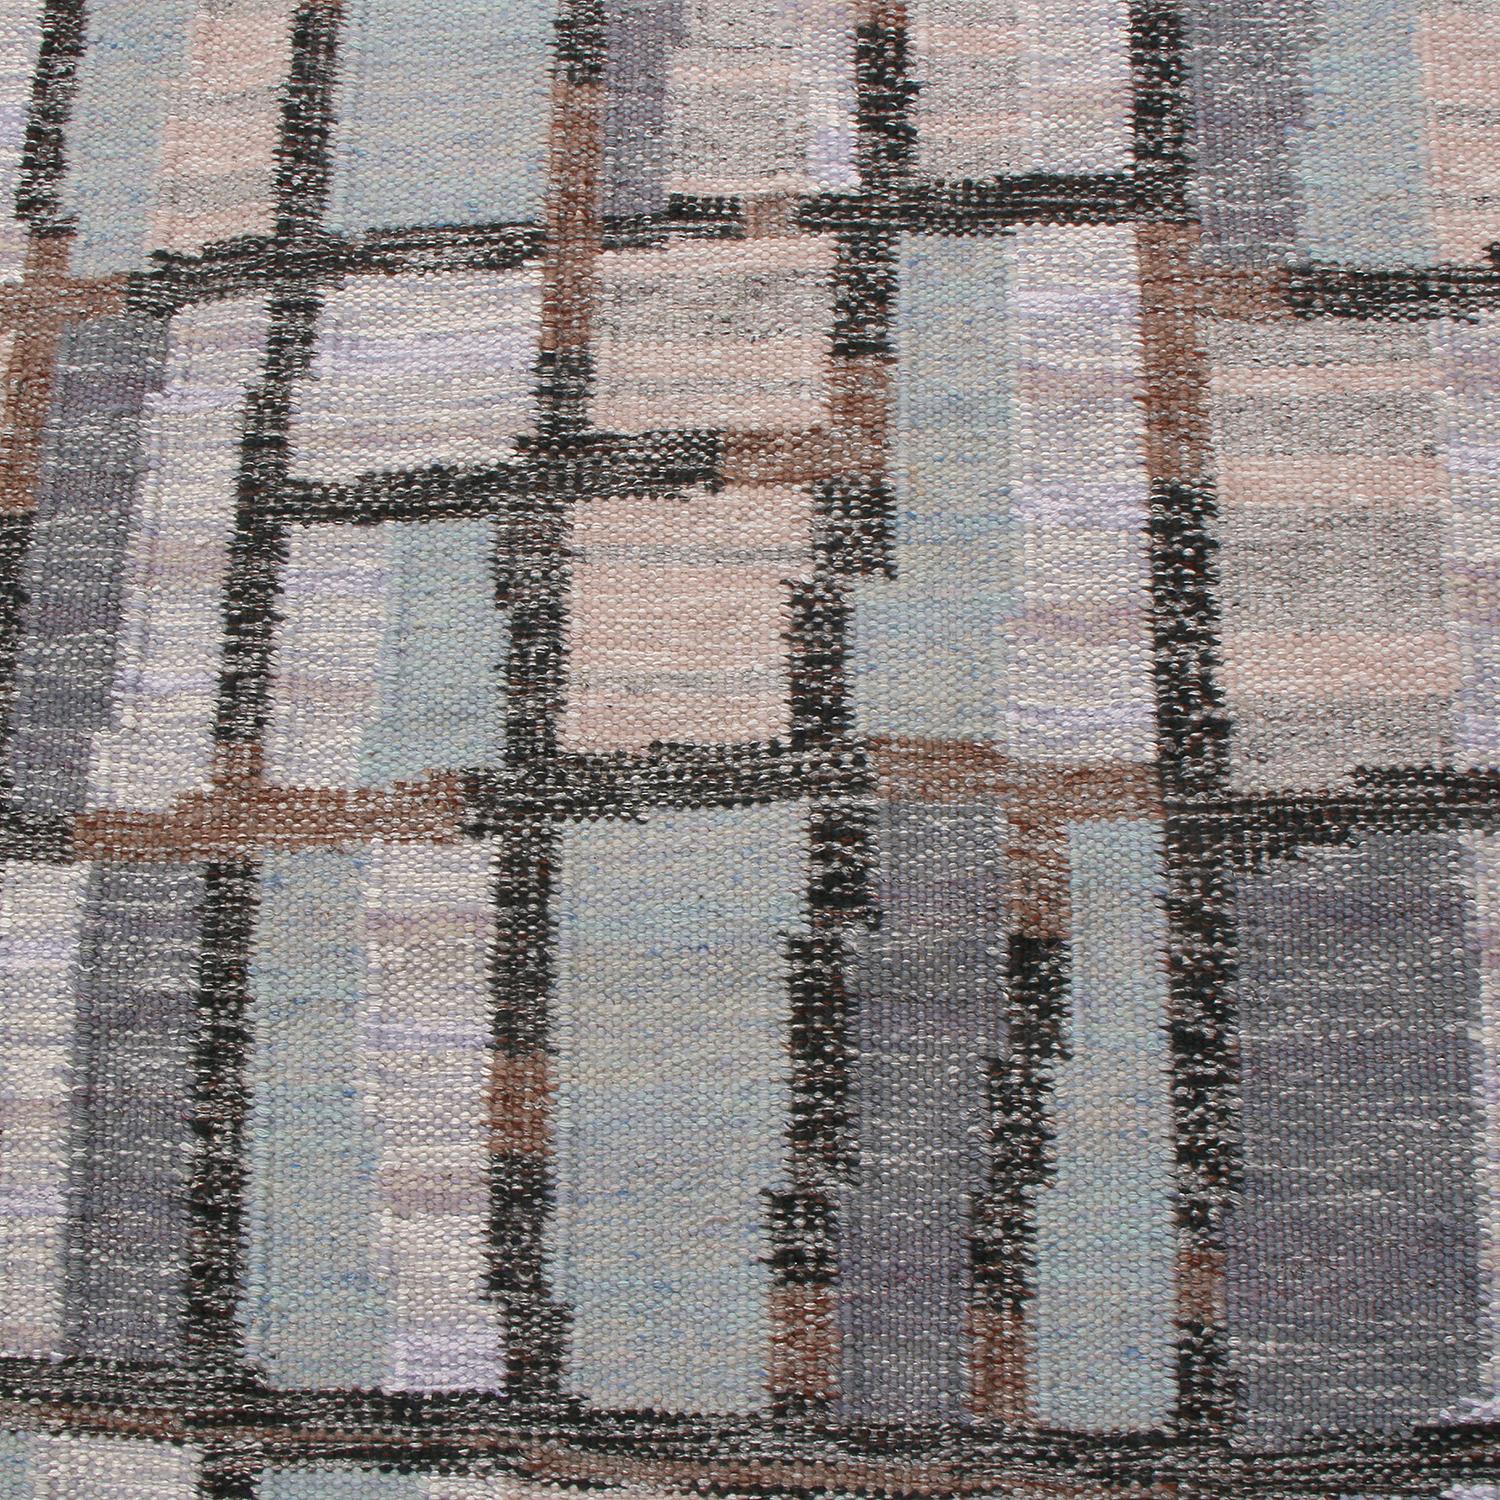 Scandinavian Modern Rug & Kilim’s Scandinavian-Inspired Blue-Gray and Beige Natural Wool Kilim Rug